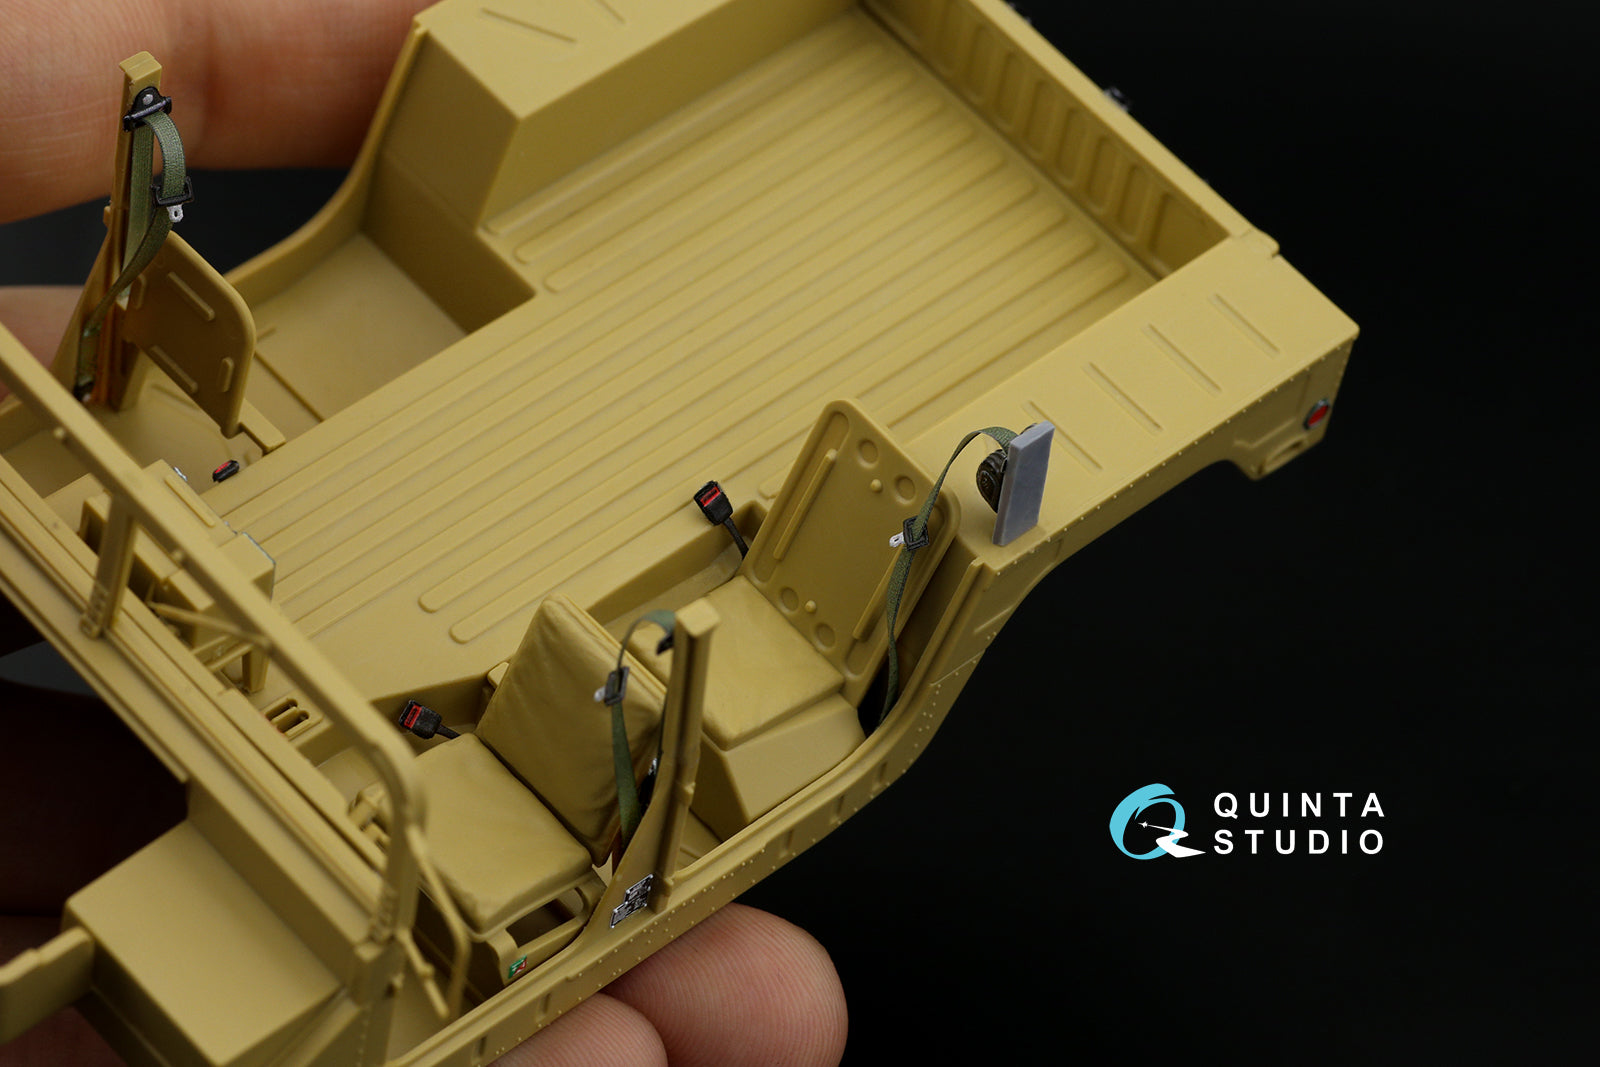 Quinta Studio - 1/35 HUMVEE family belts QR35003 for all kits